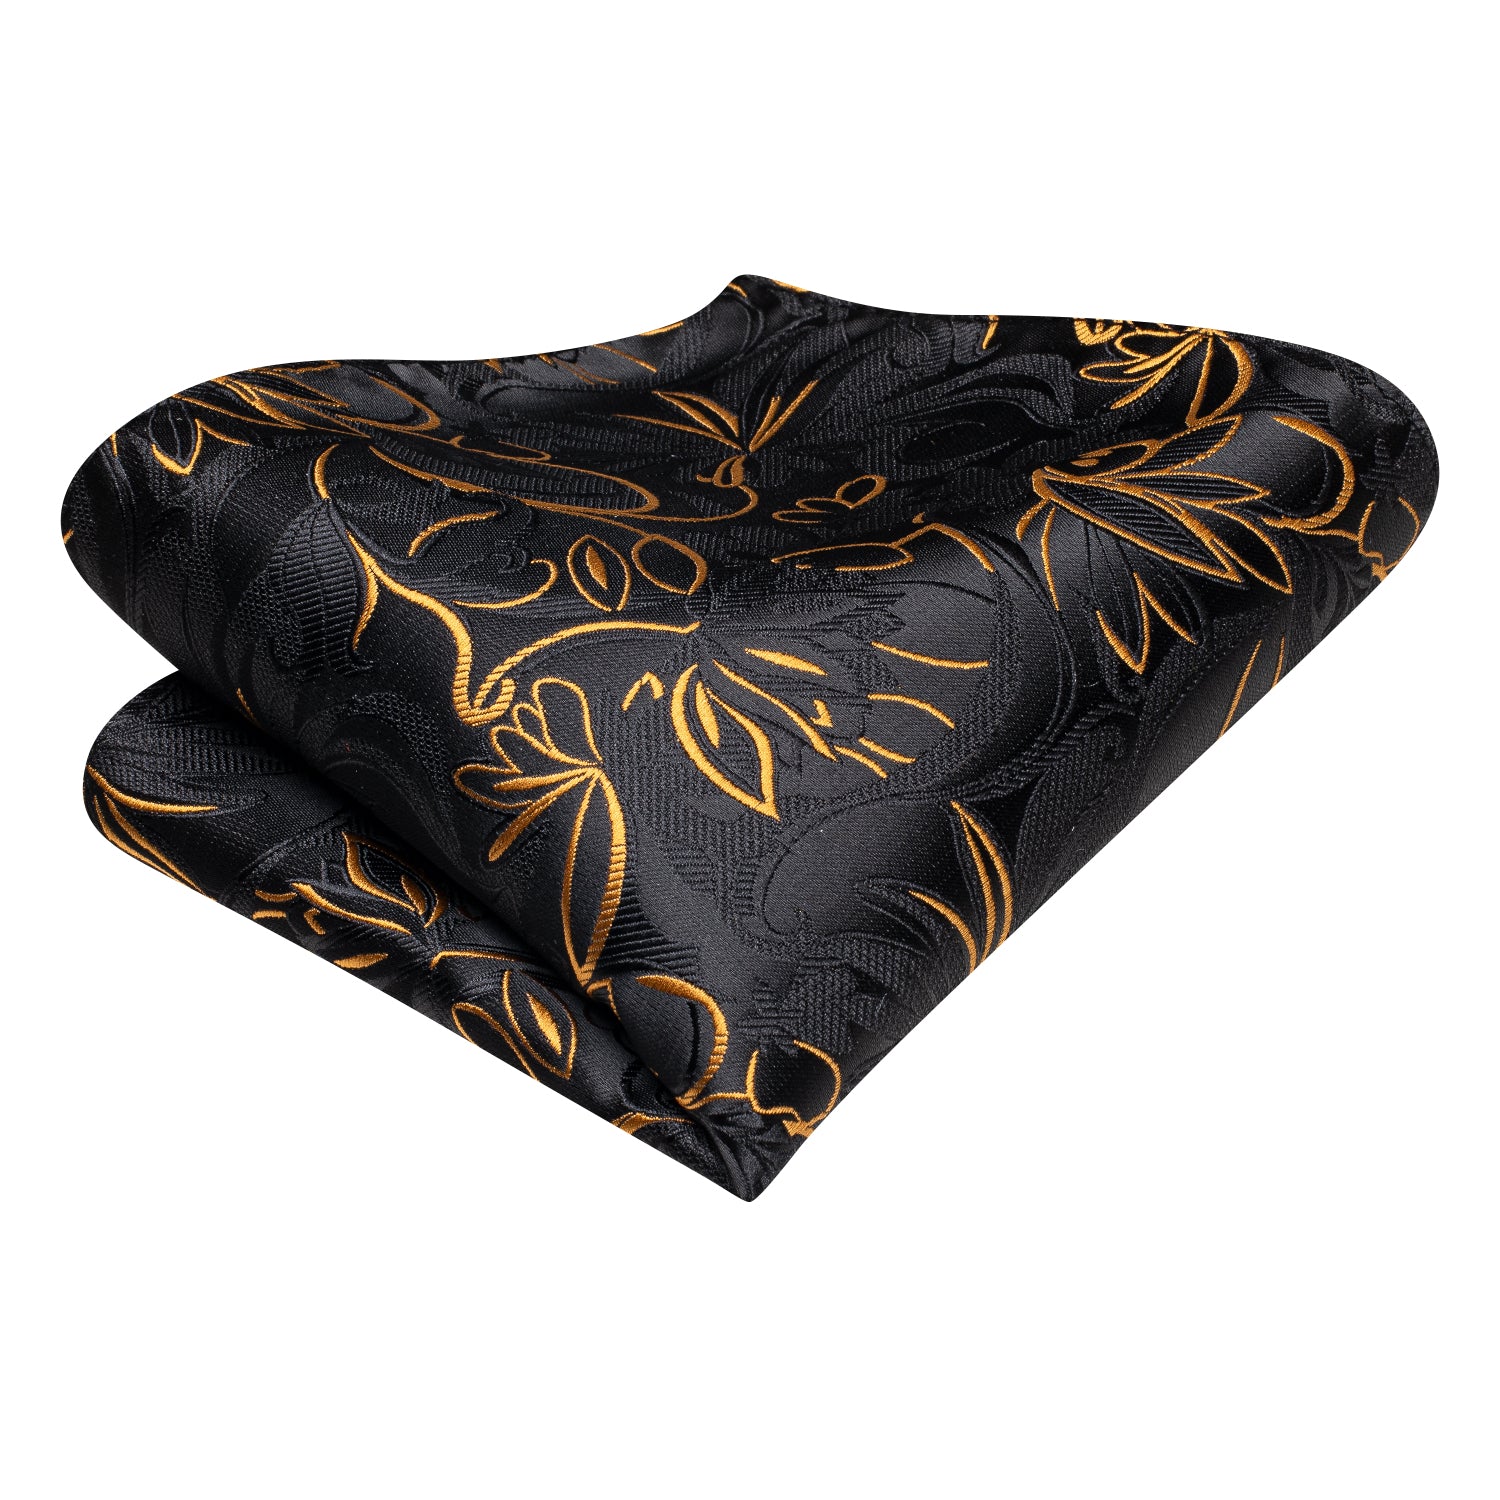 New Black Golden Floral Silk Tie Pocket Square Cufflinks Set